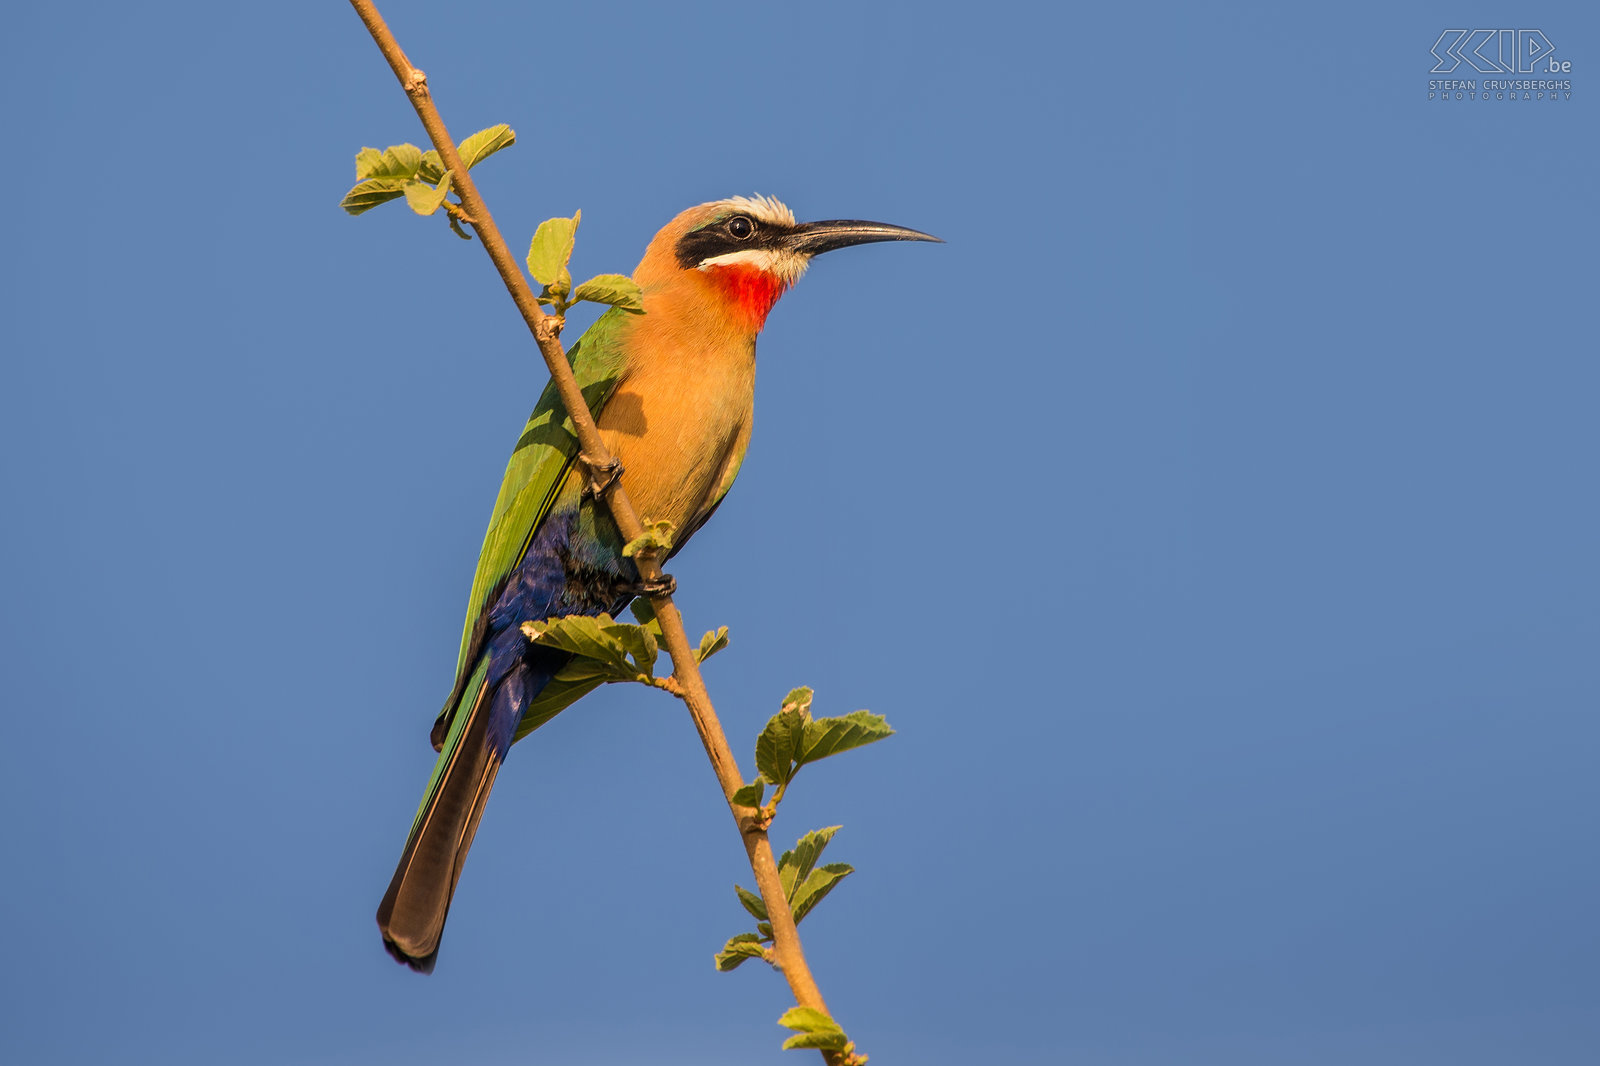 Lower Zambezi - White-fronted bee-eater (Merops bullockoides) Stefan Cruysberghs